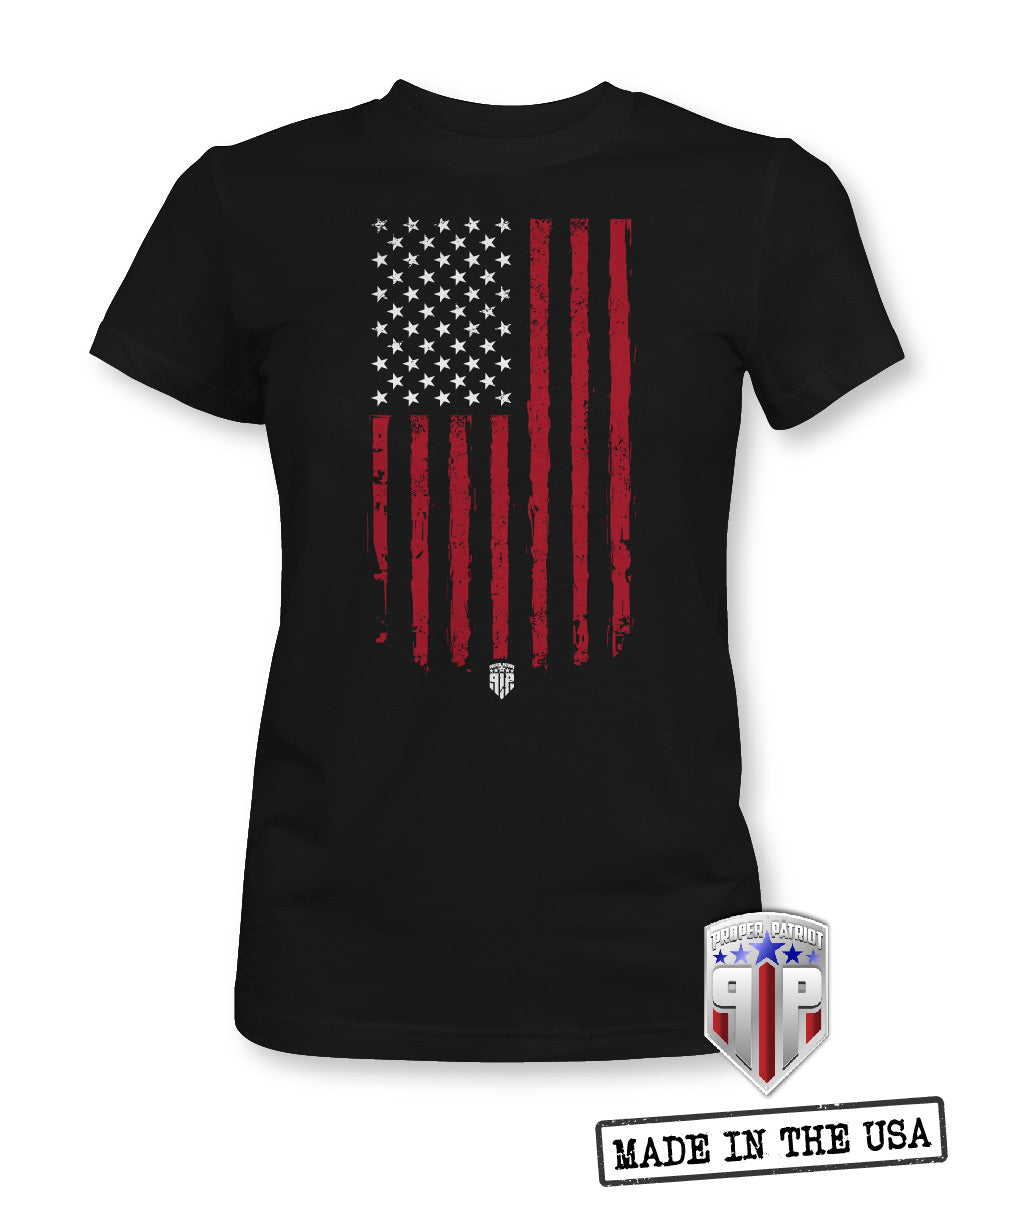 Tattered American Flag - USA Apparel Shirts - Women's Patriotic Shirts –  Proper Patriot